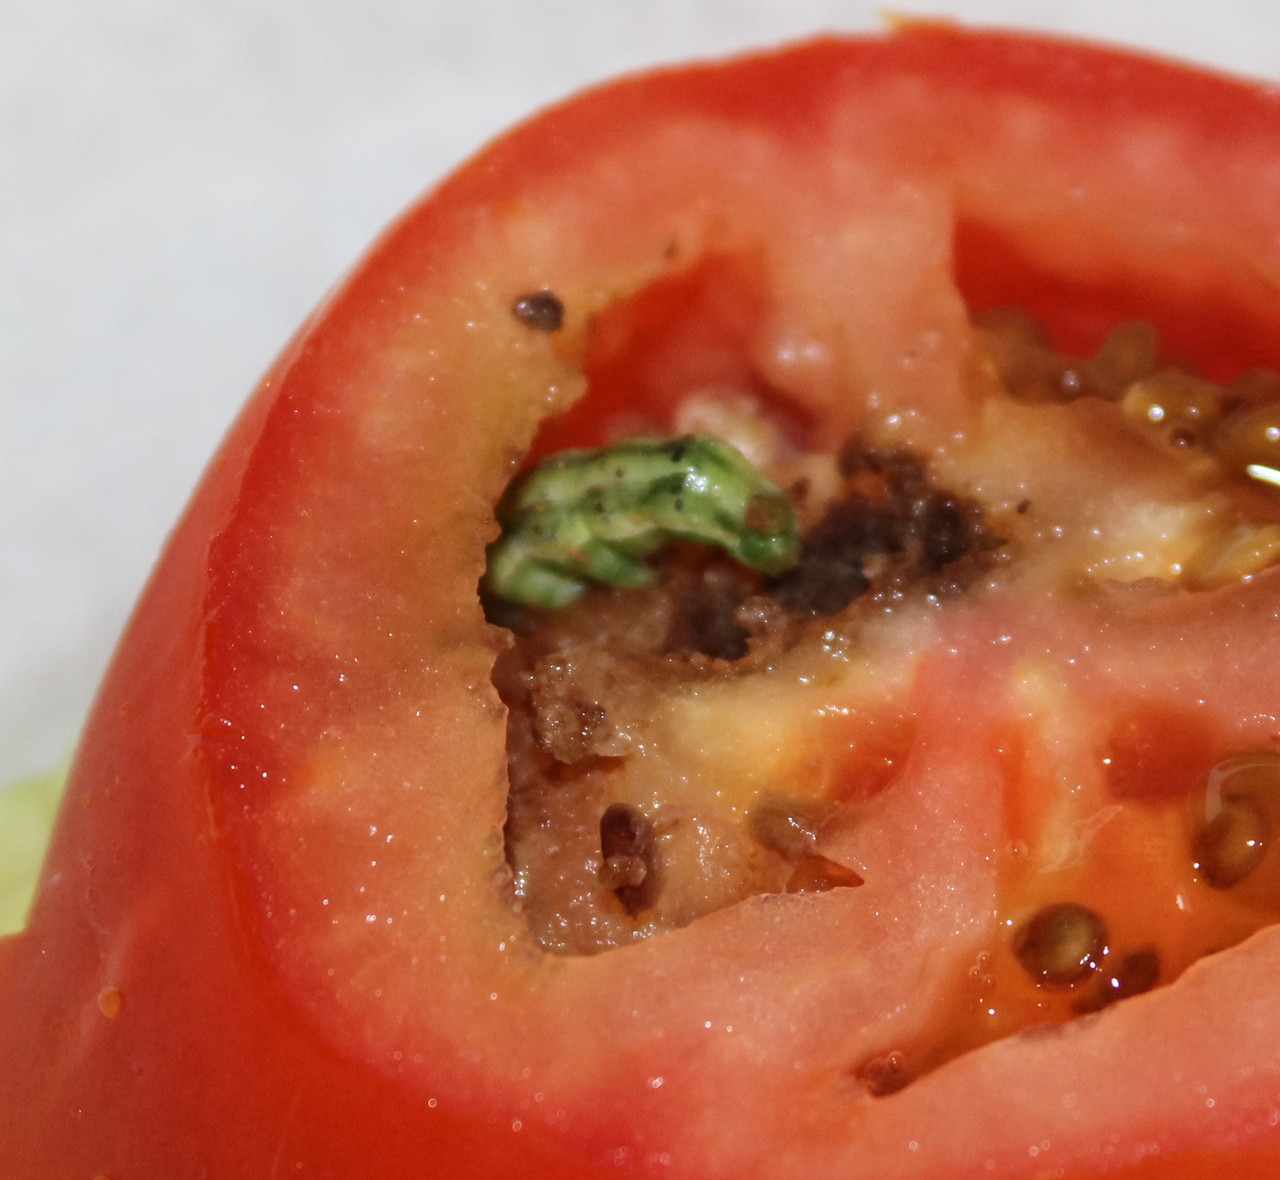 Tomato Fruitworm larvae on tomato fruit